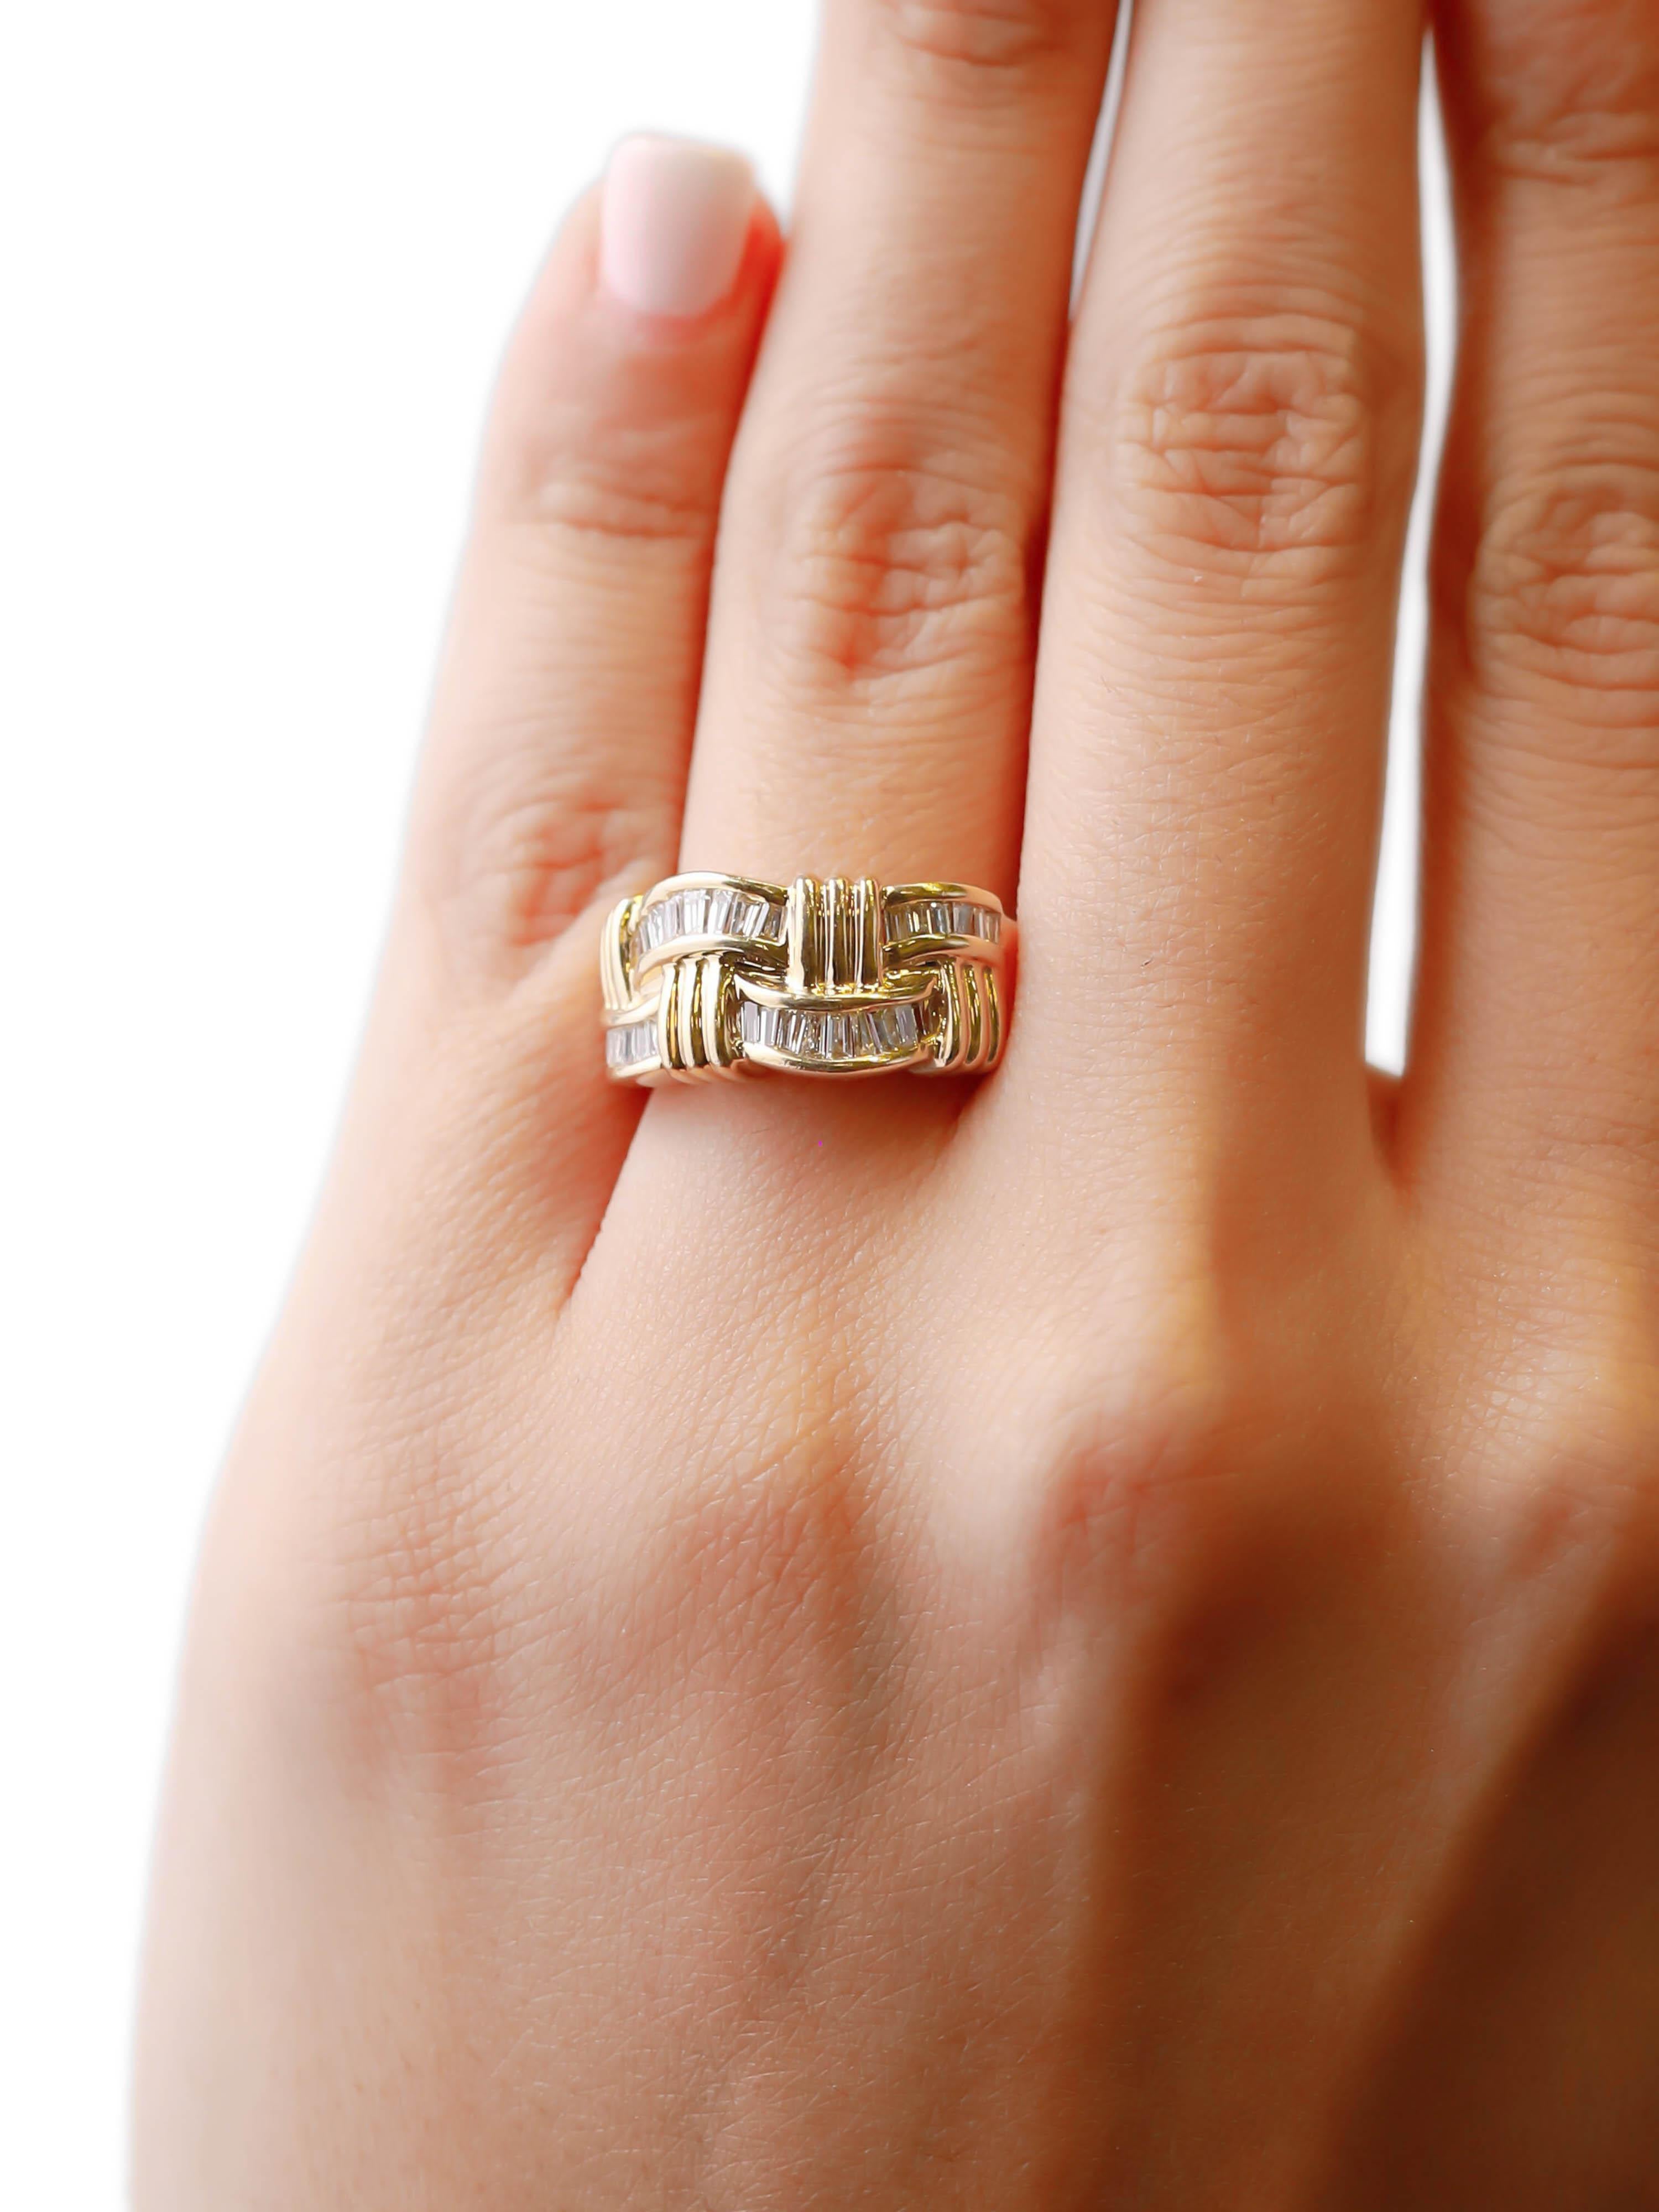 Women's 1.00 Carat Baguette Cut Diamond Engagement Ring Fine 14k Yellow Gold For Sale